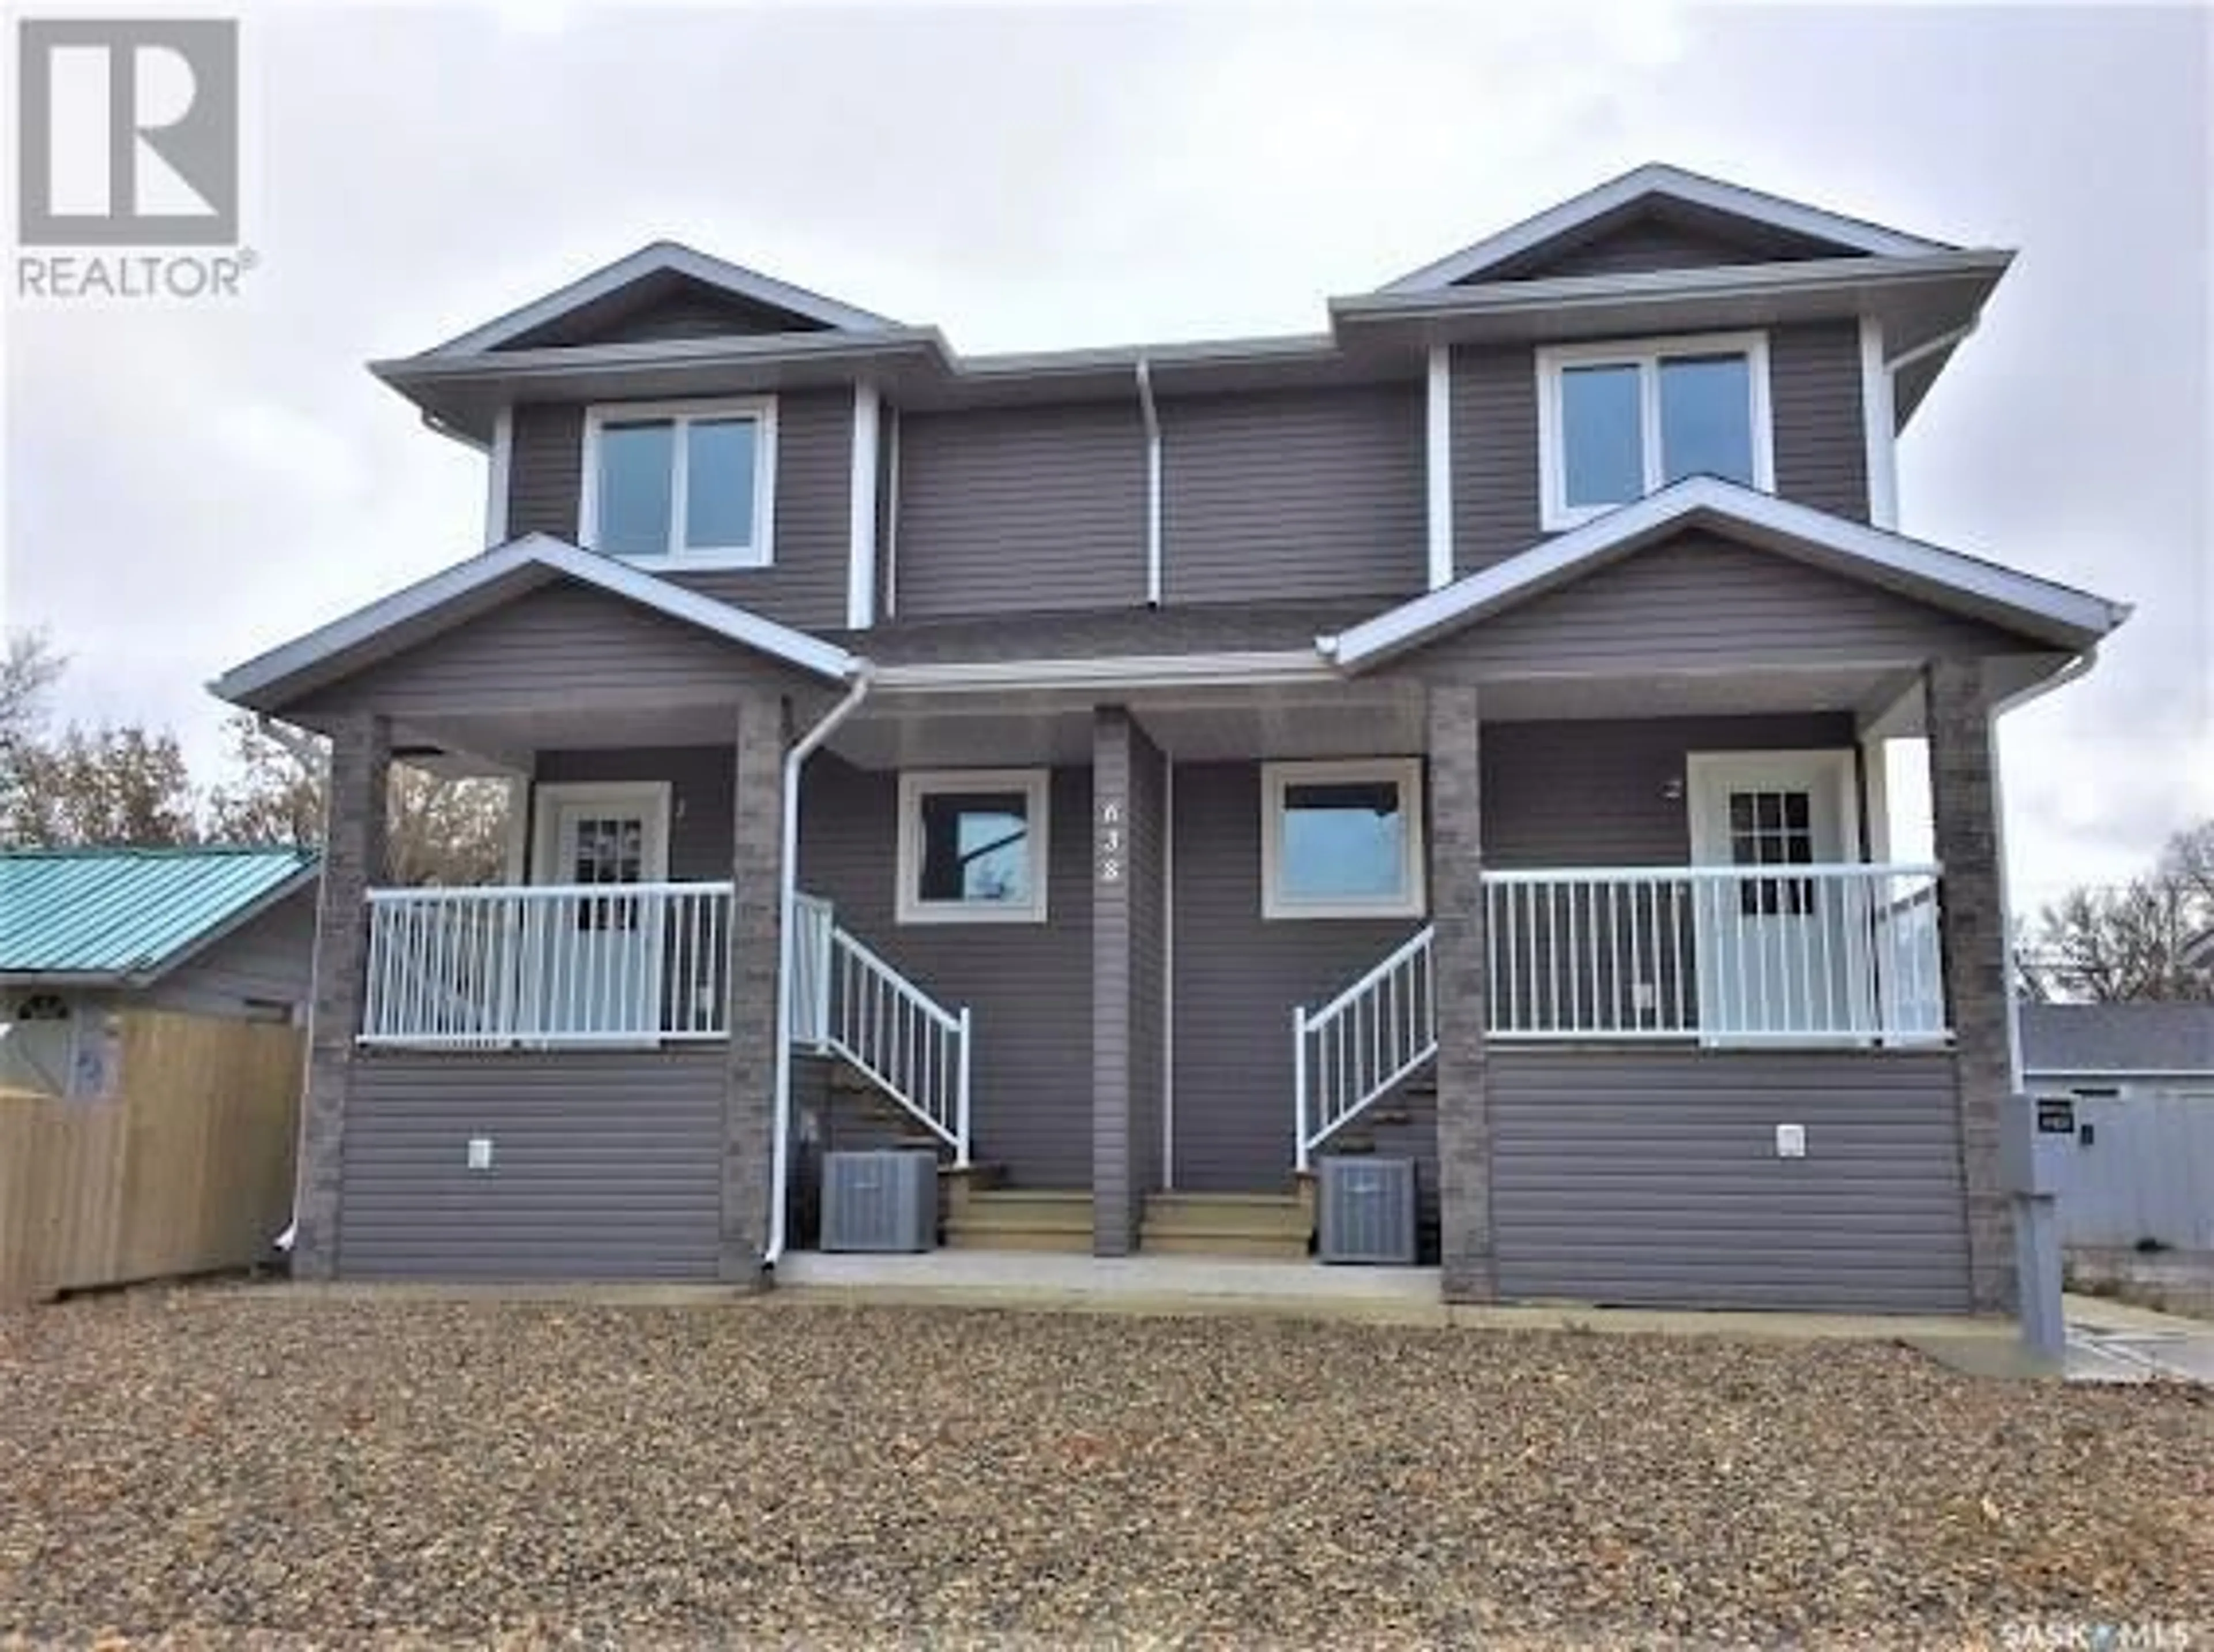 Home with stucco exterior material for 1-4 638 Alberta STREET, Estevan Saskatchewan S4A1R6